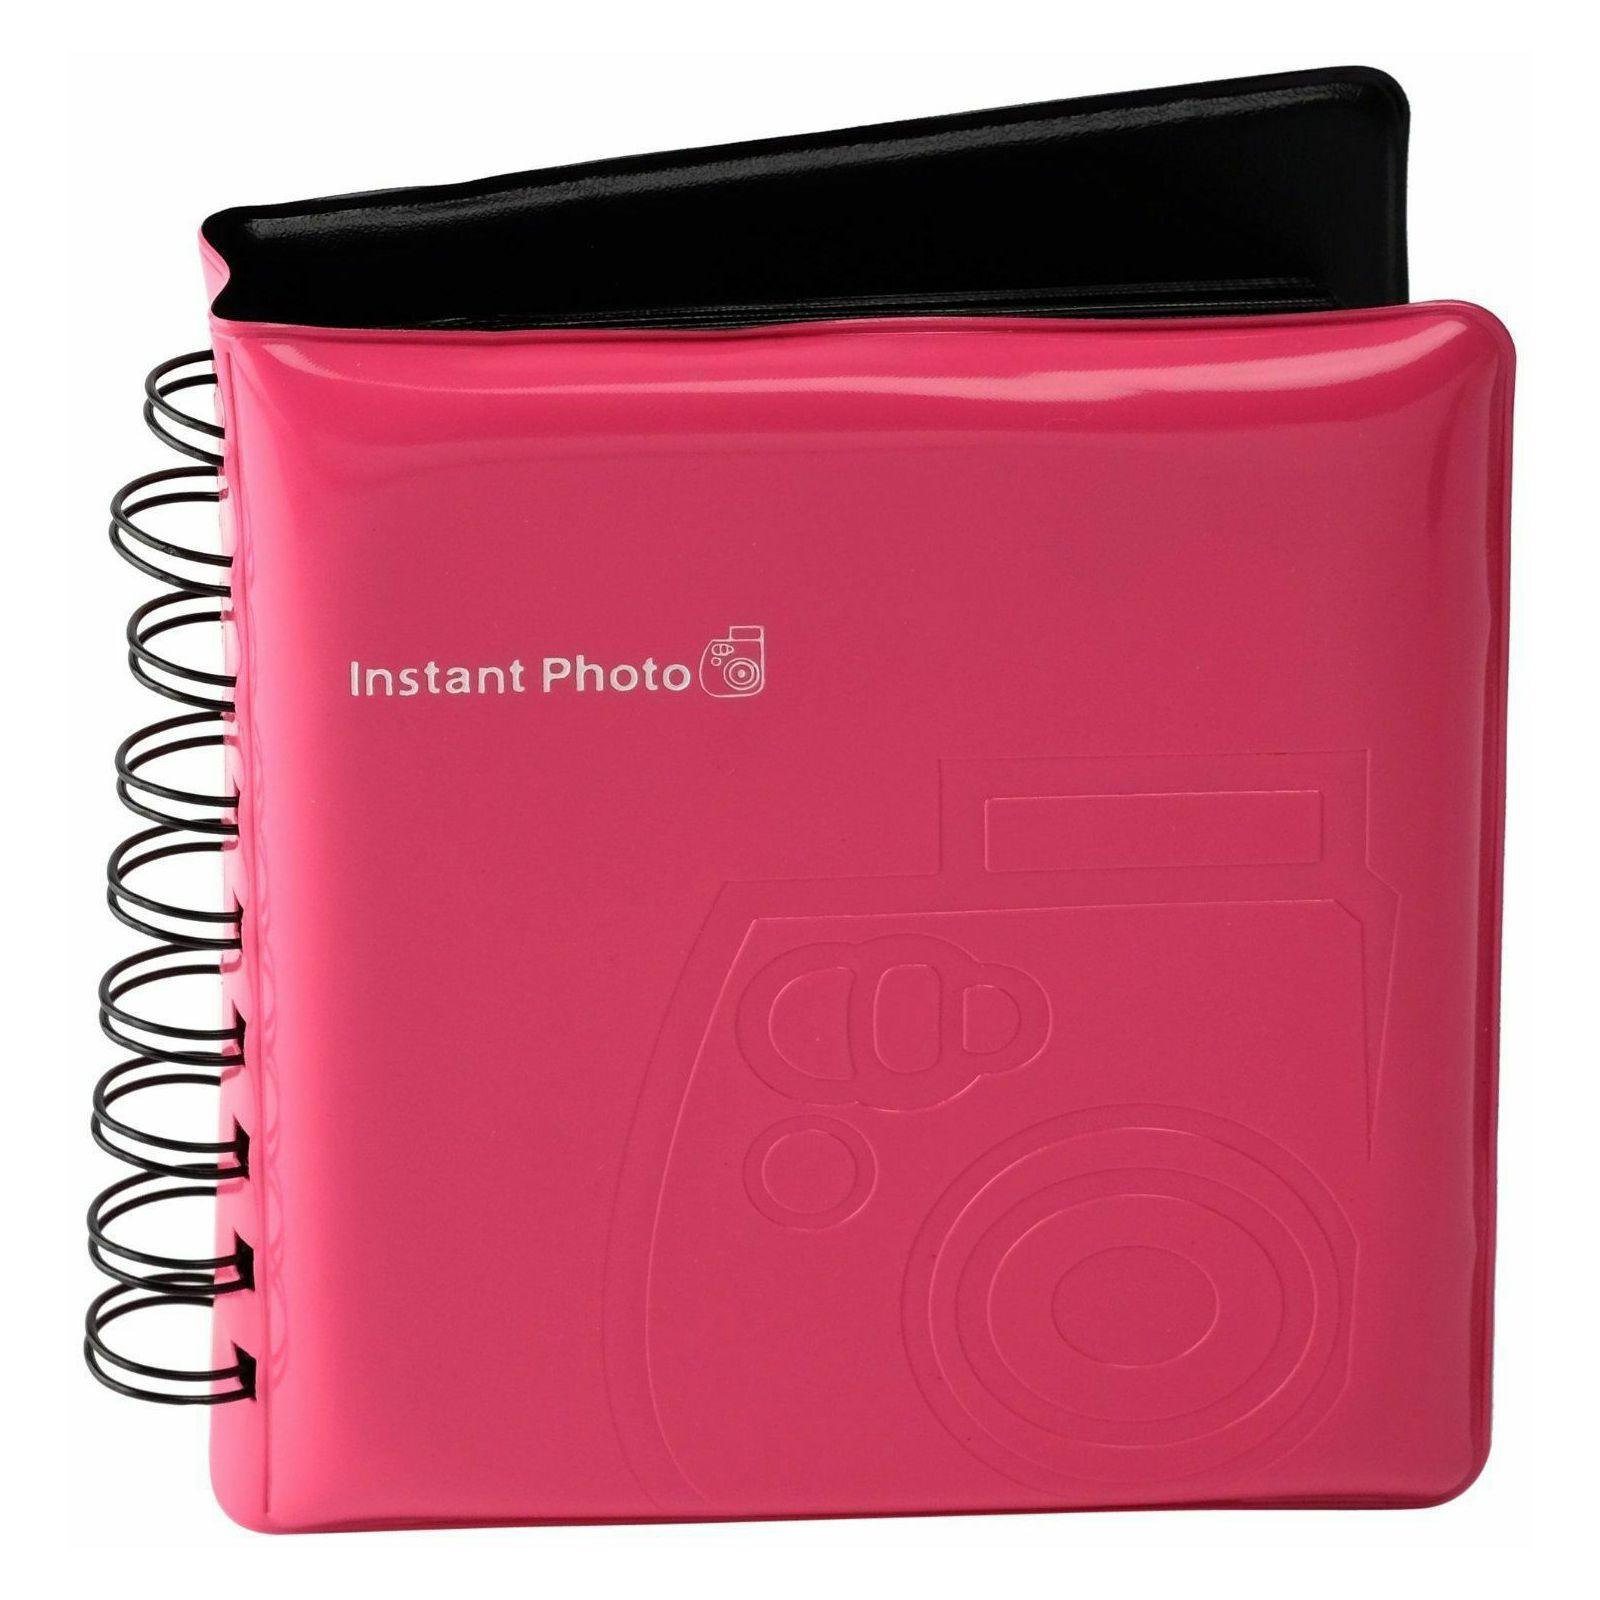 Fujifilm Instax Mini foto album za 64 fotografije rozi Fuji Photo Album pink for 64 photos